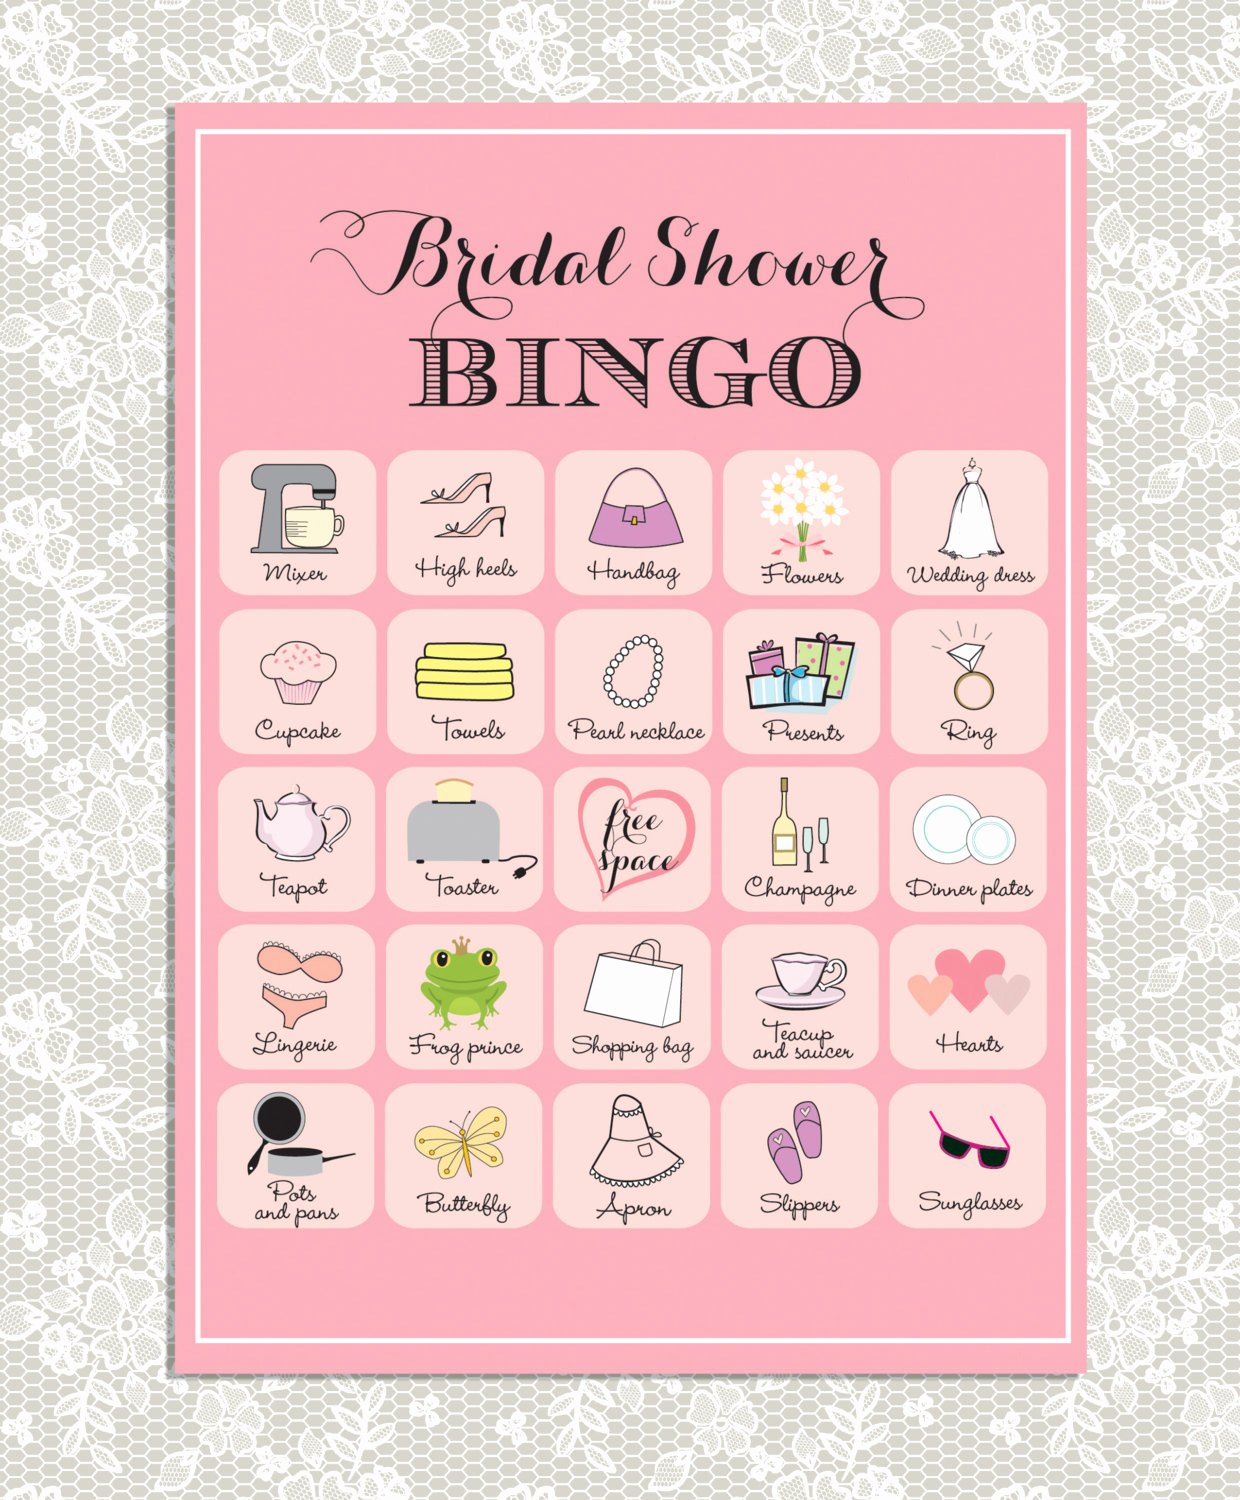 Bridal Shower Bingo Template Beautiful Printable Bridal Shower Bingo 40 Unique Game Cards In Pink